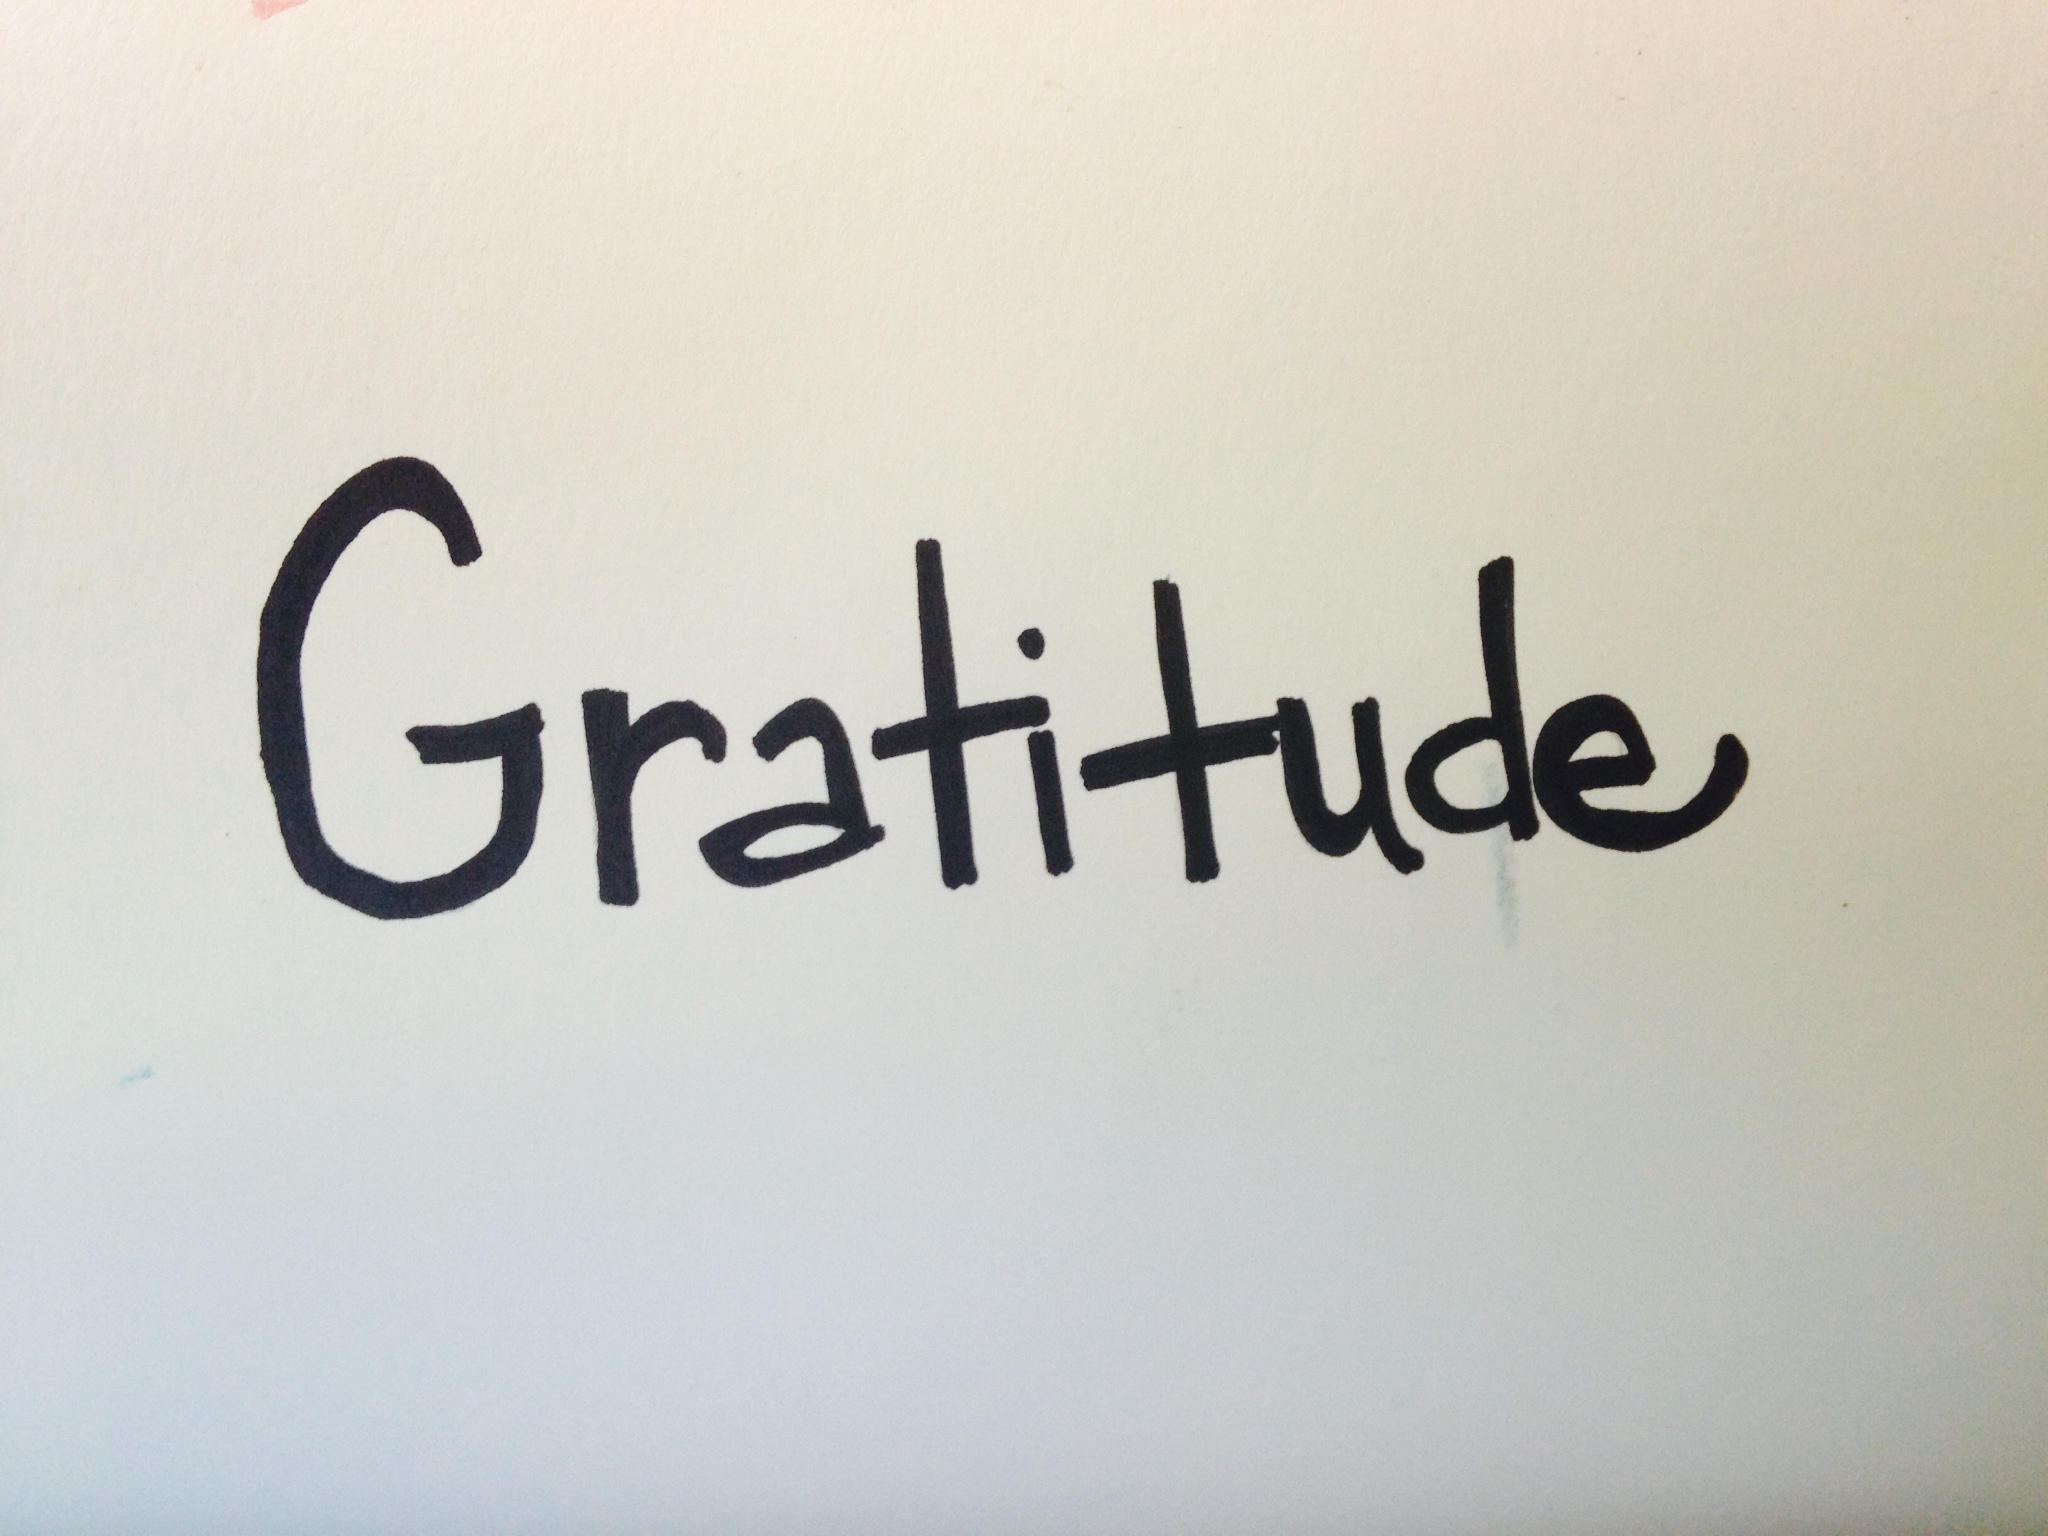 Practicing The Art of Gratitude